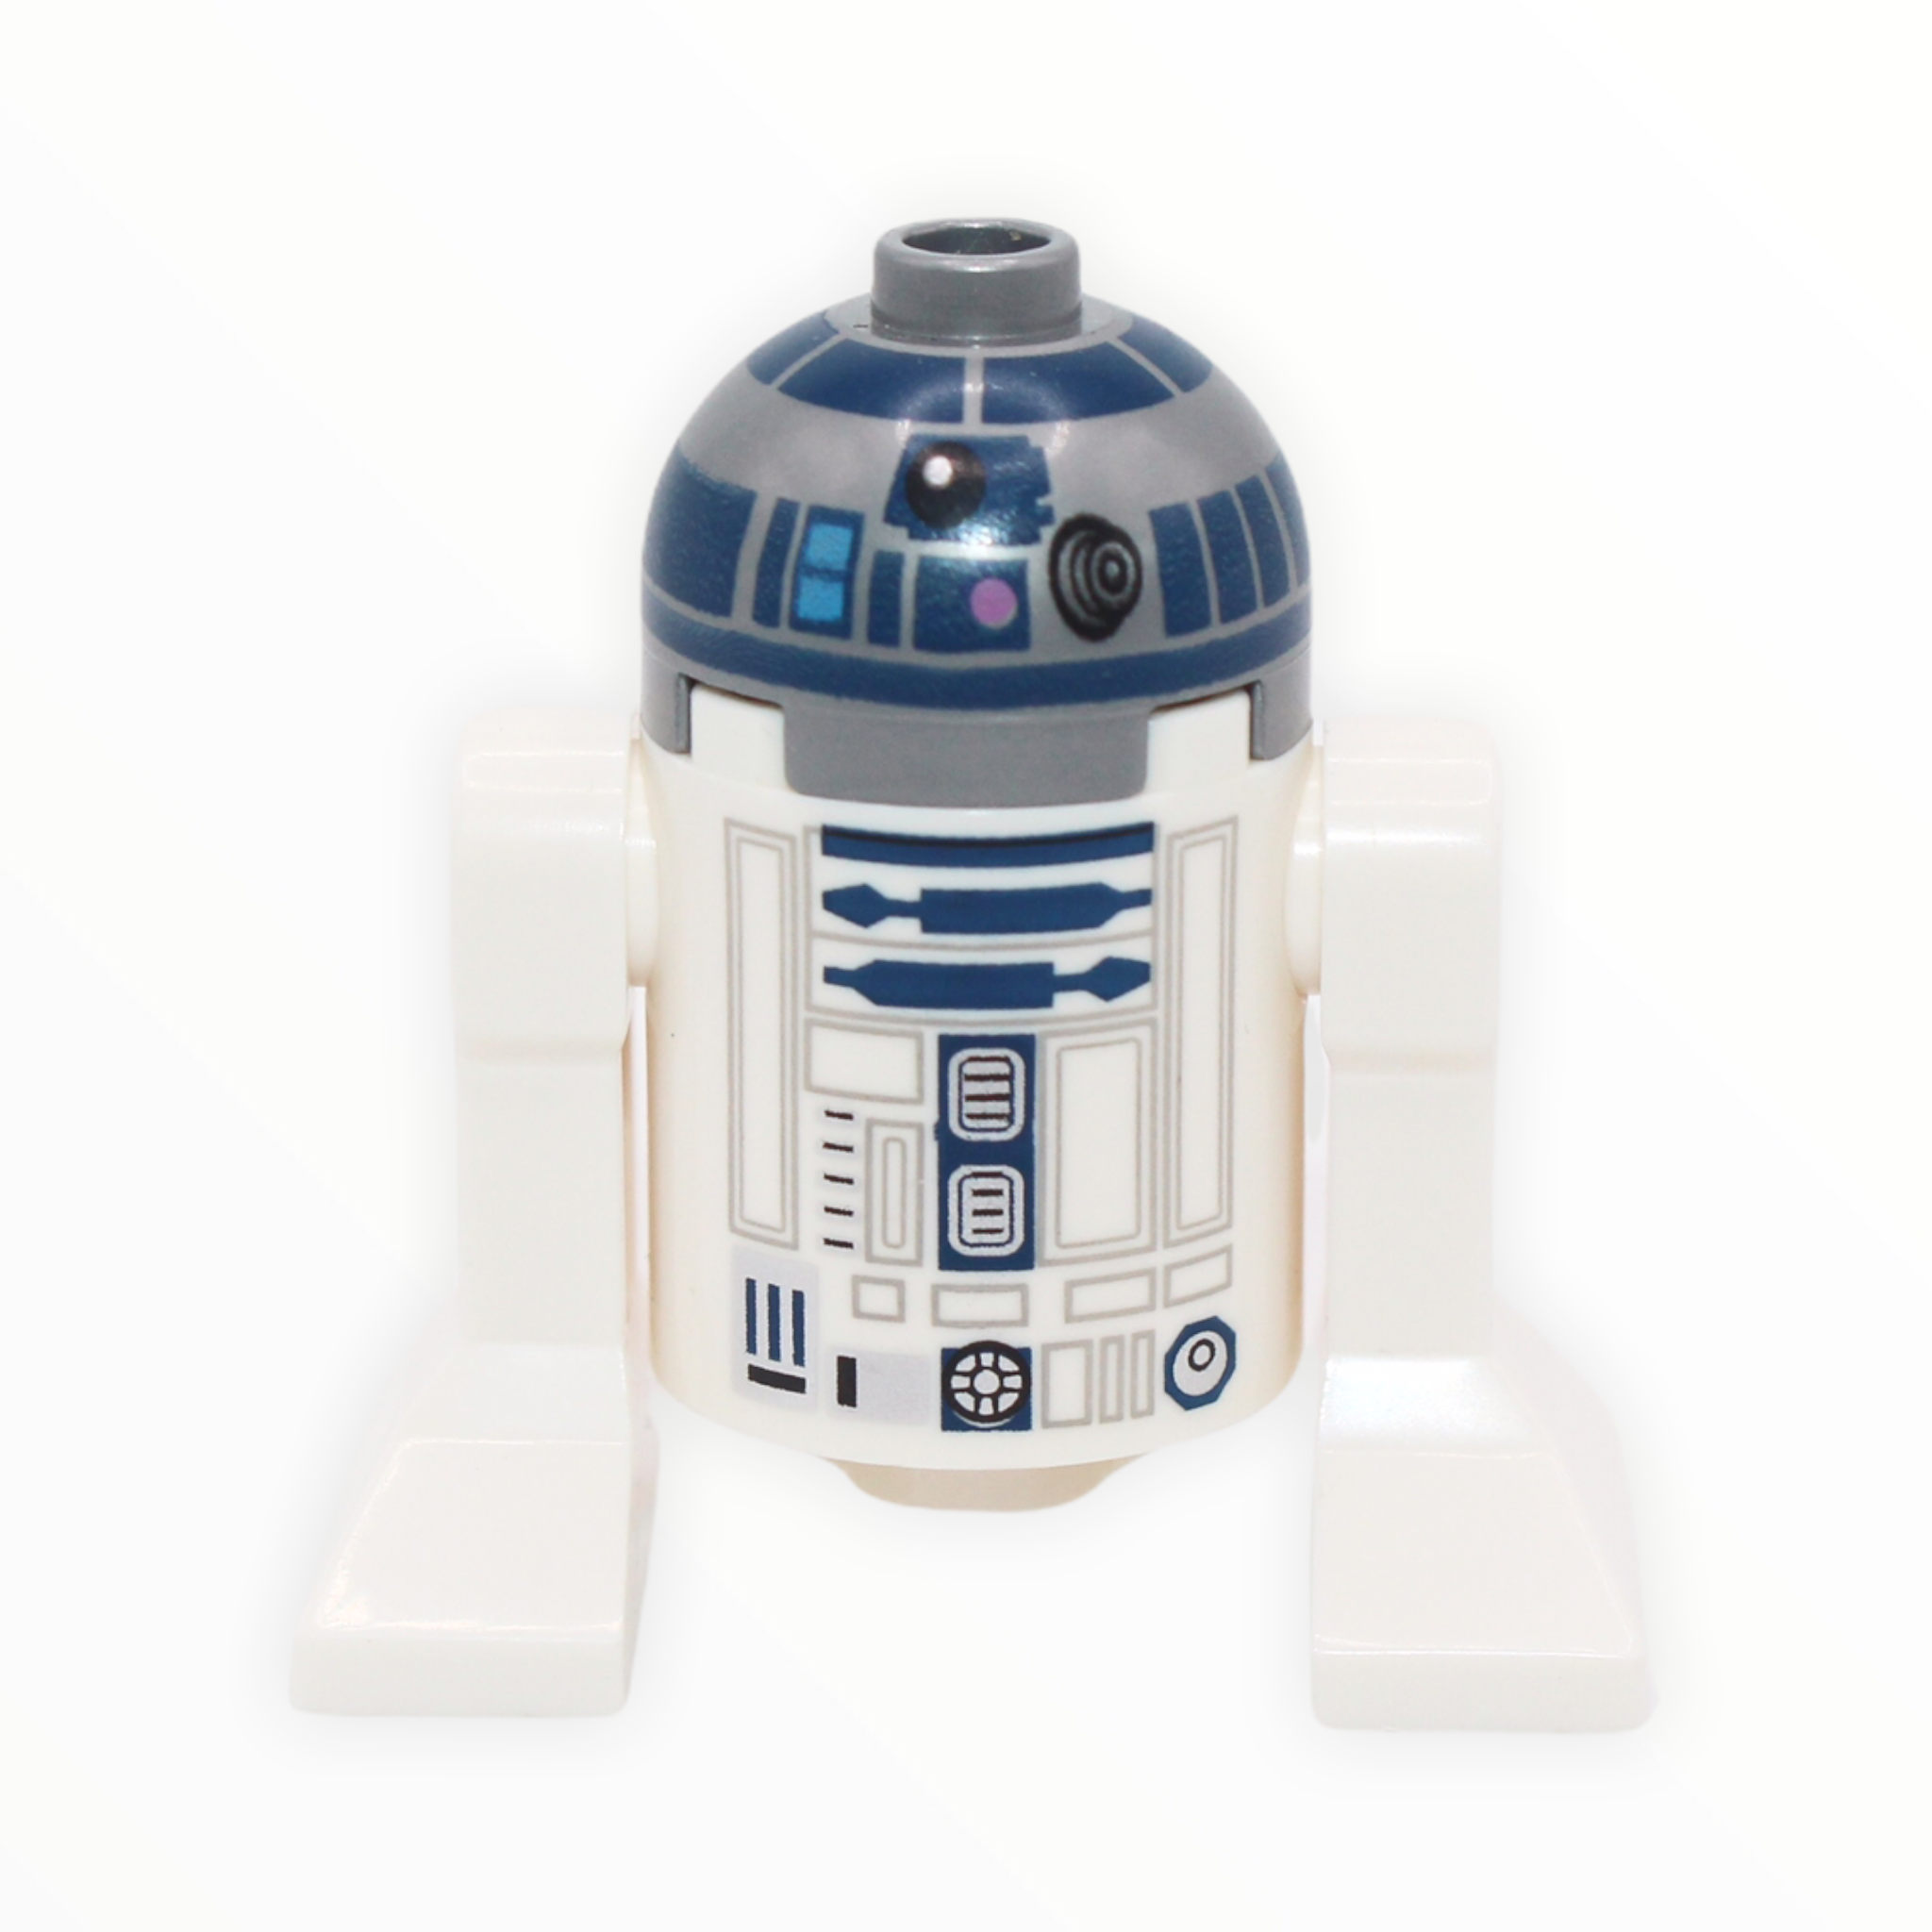 R2-D2 (flat silver, pink dot, large photoreceptor)